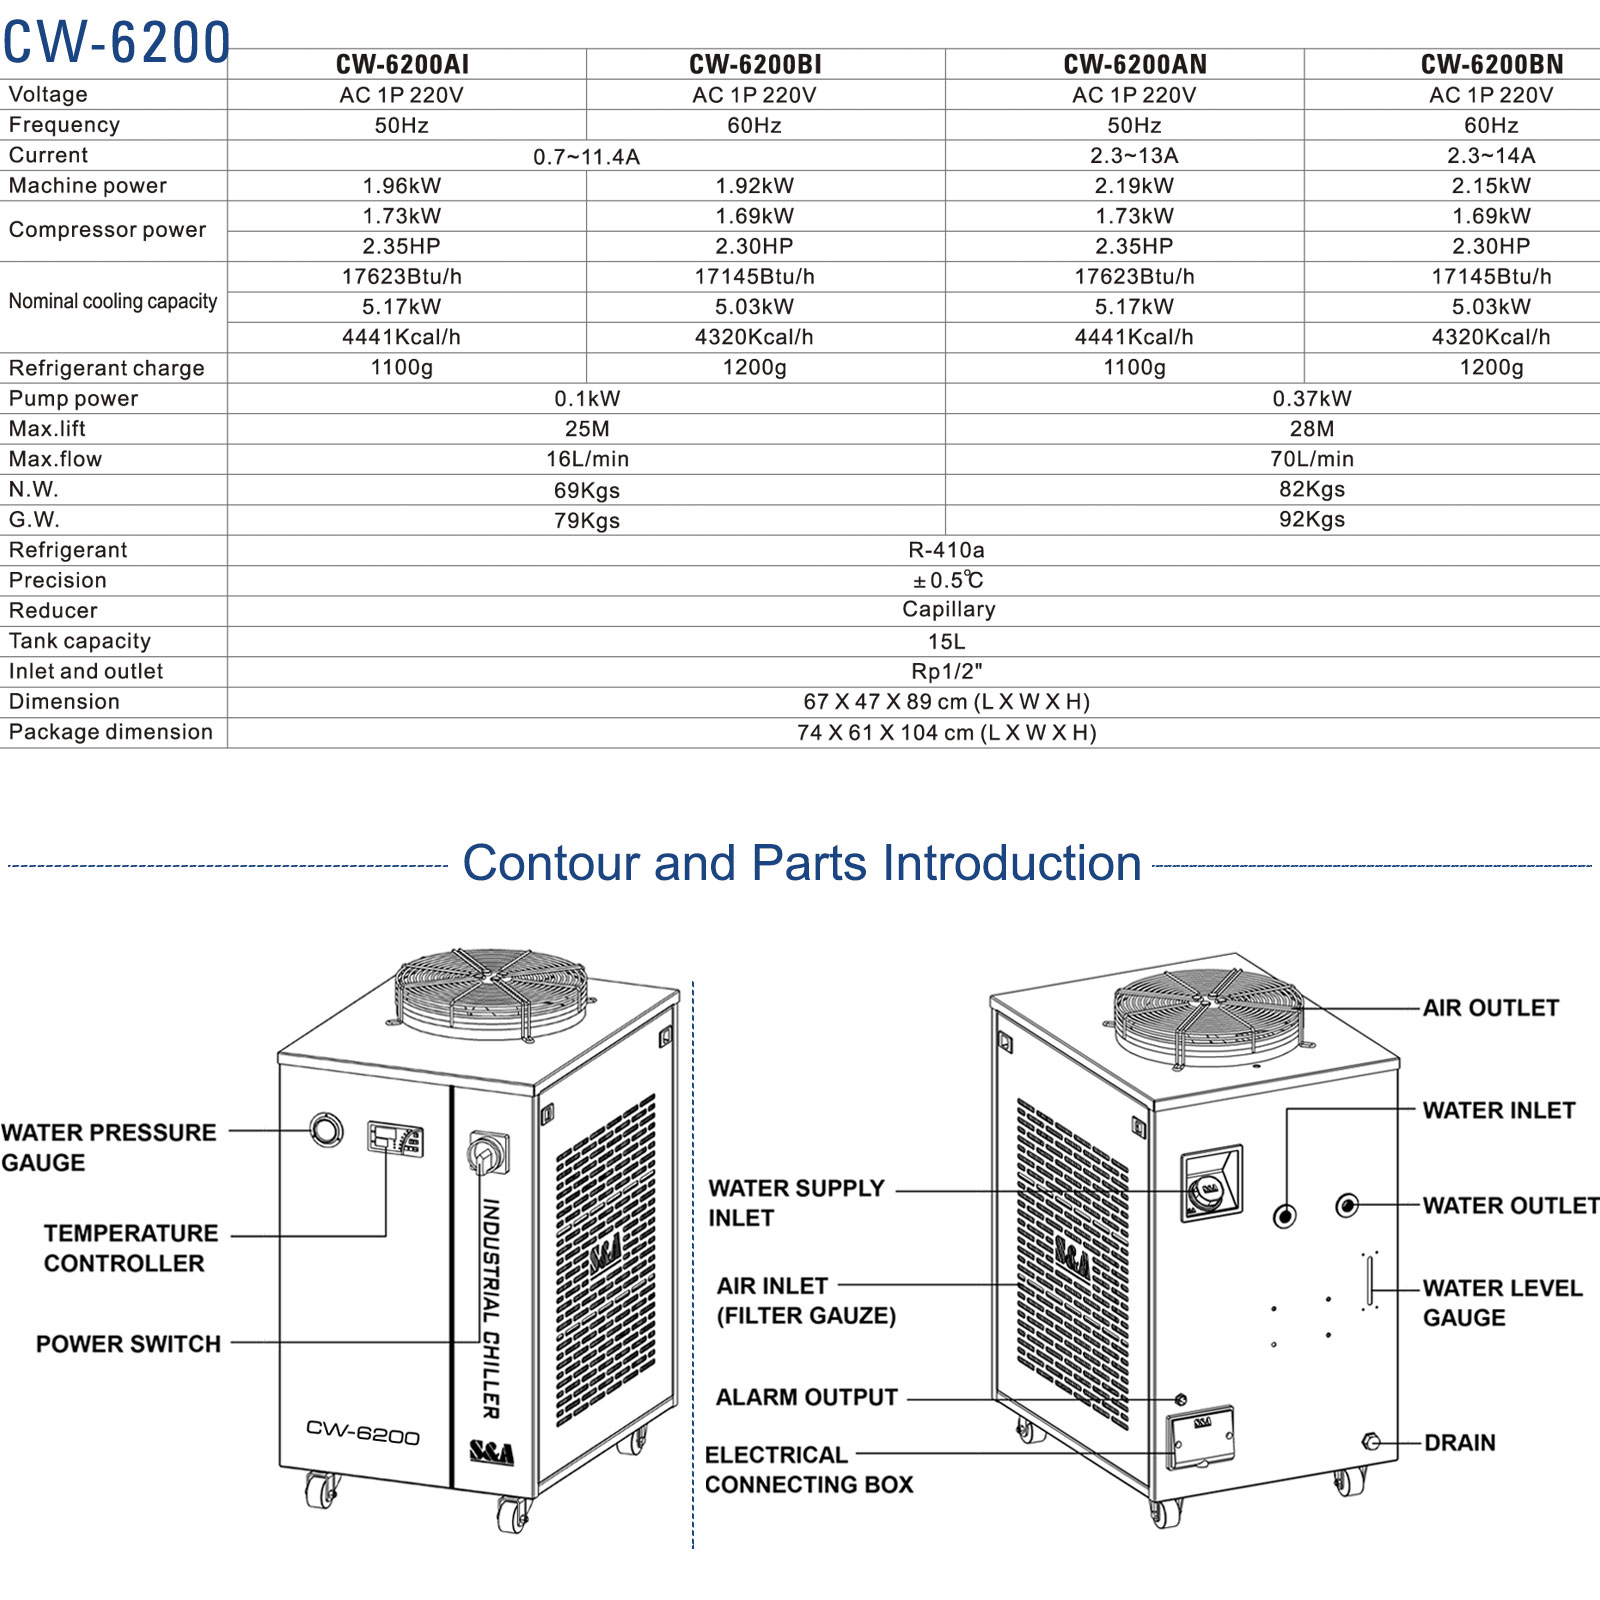 S&A Genuine CW-6200 Series (CW-6200AI/AN/BN/BN) Industrial Water Chiller